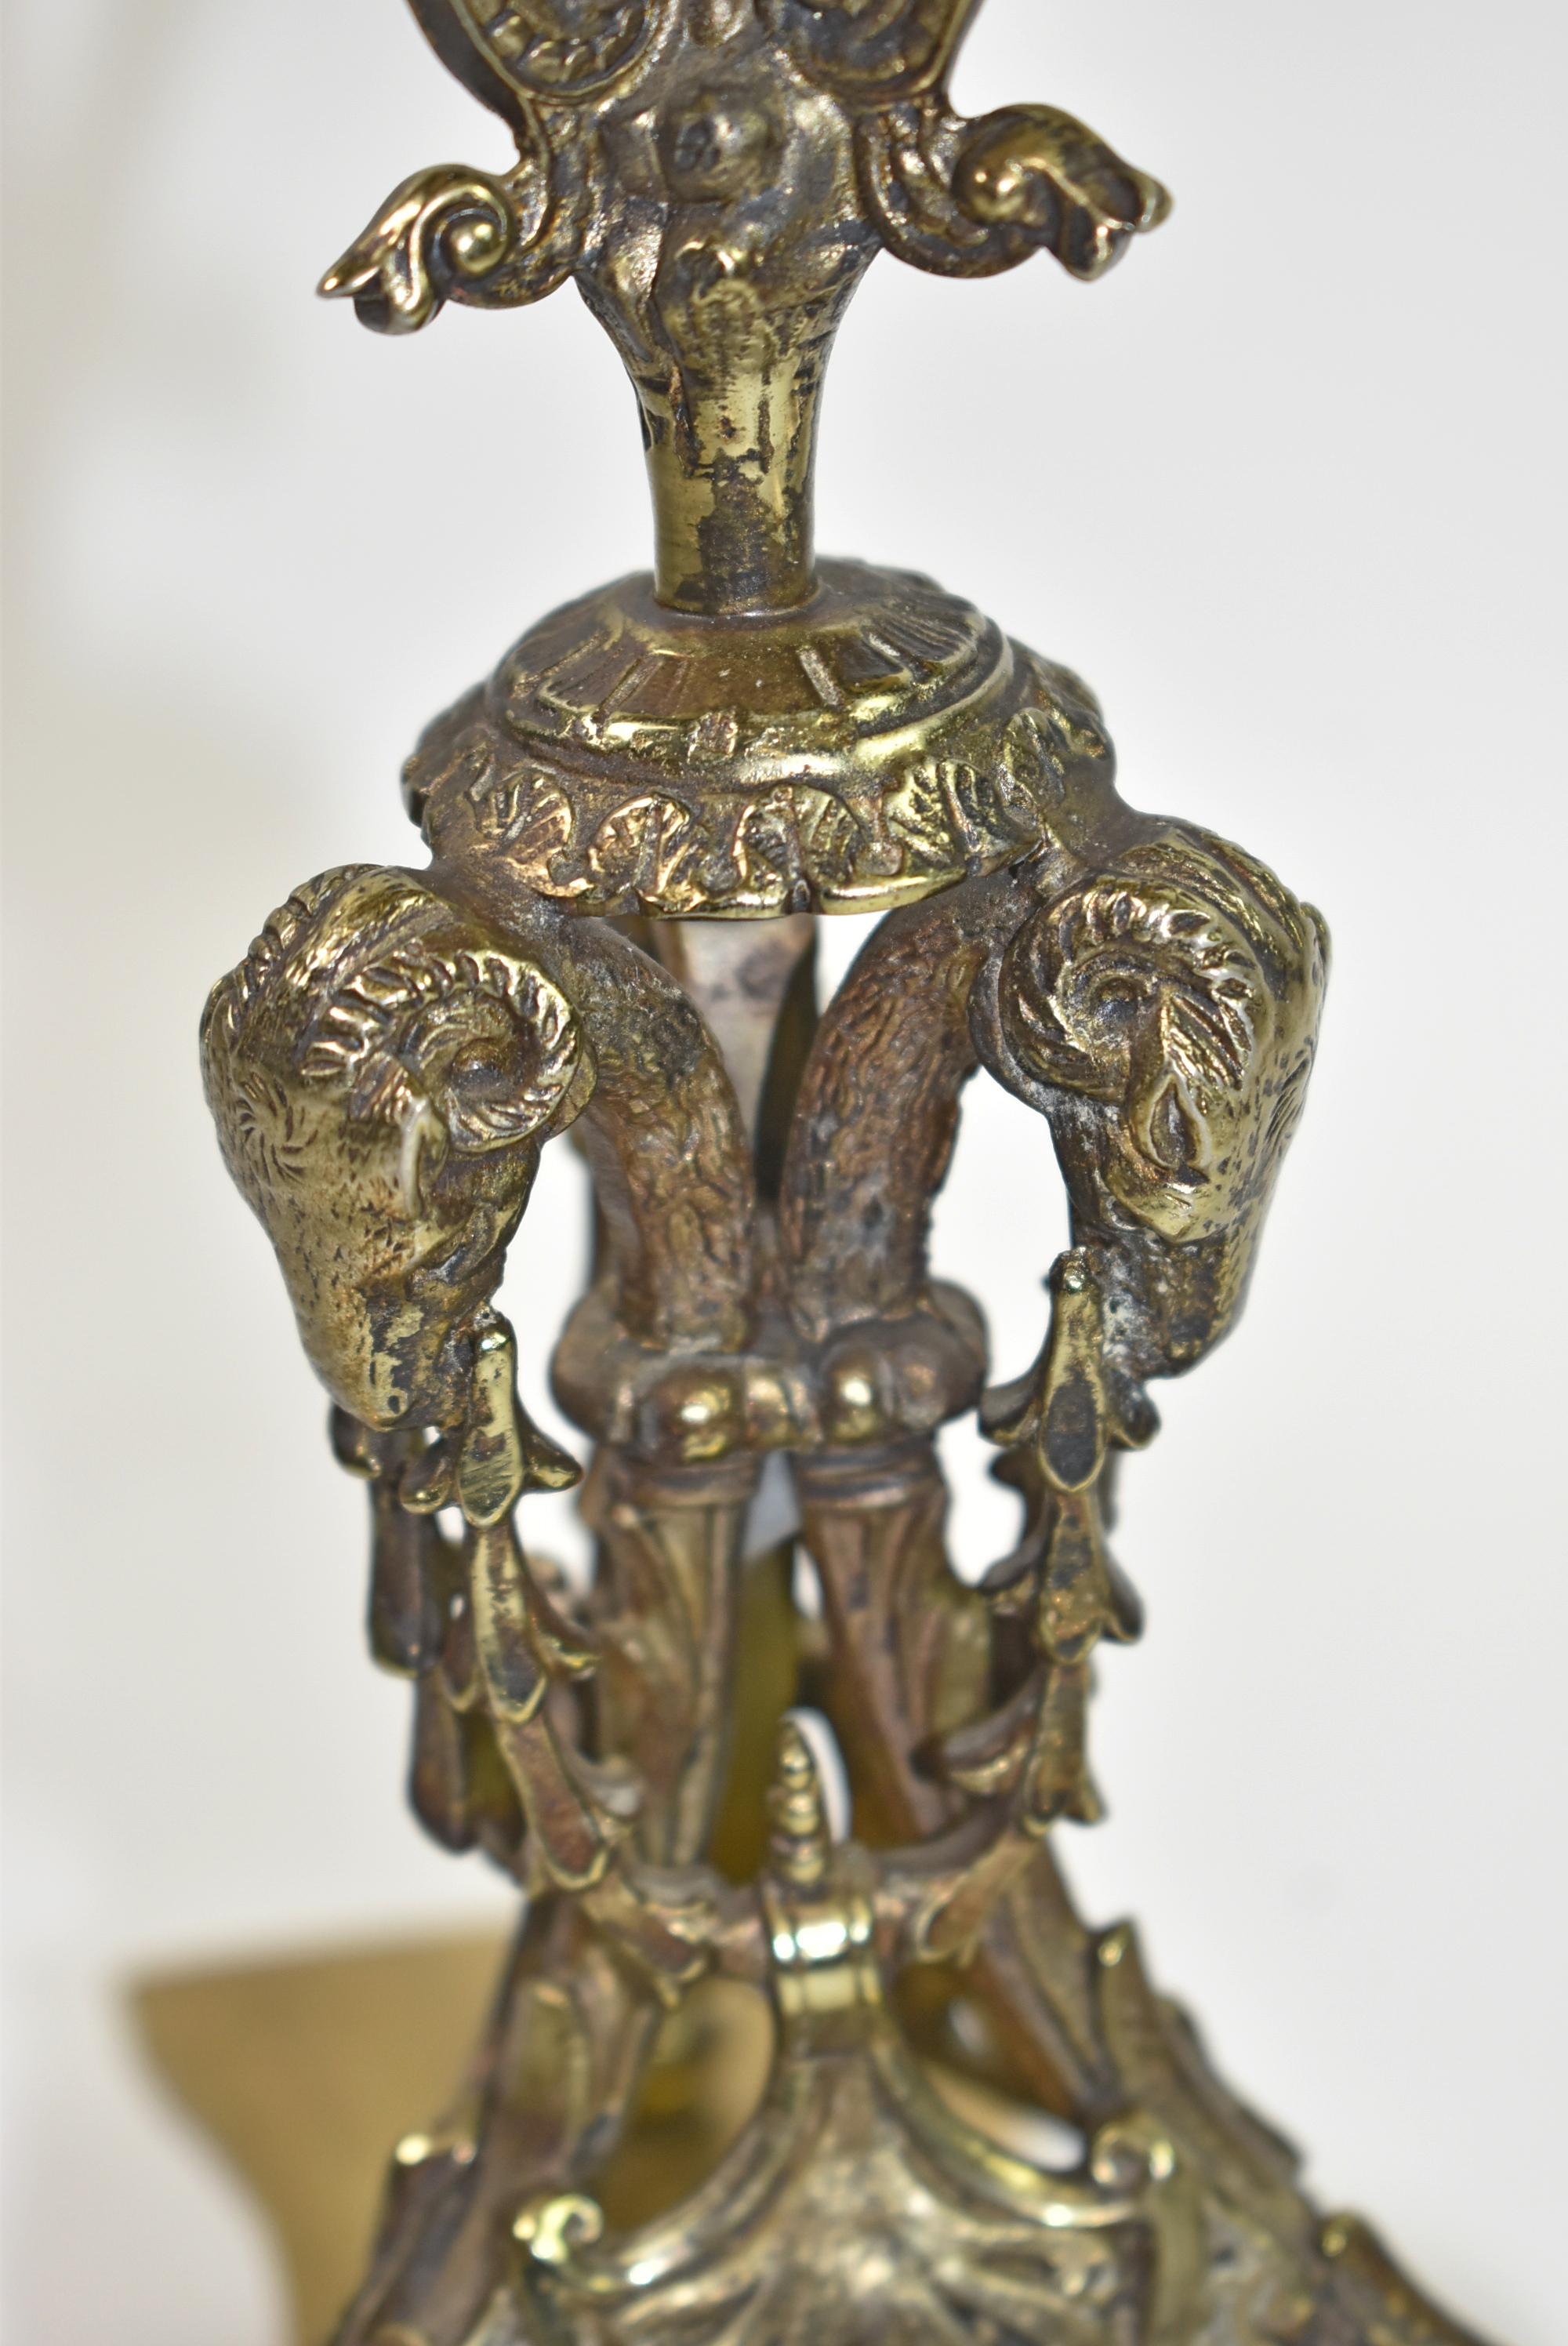 Tazza Brass Center Pedestal with Decorative Meissen Bowl For Sale 3